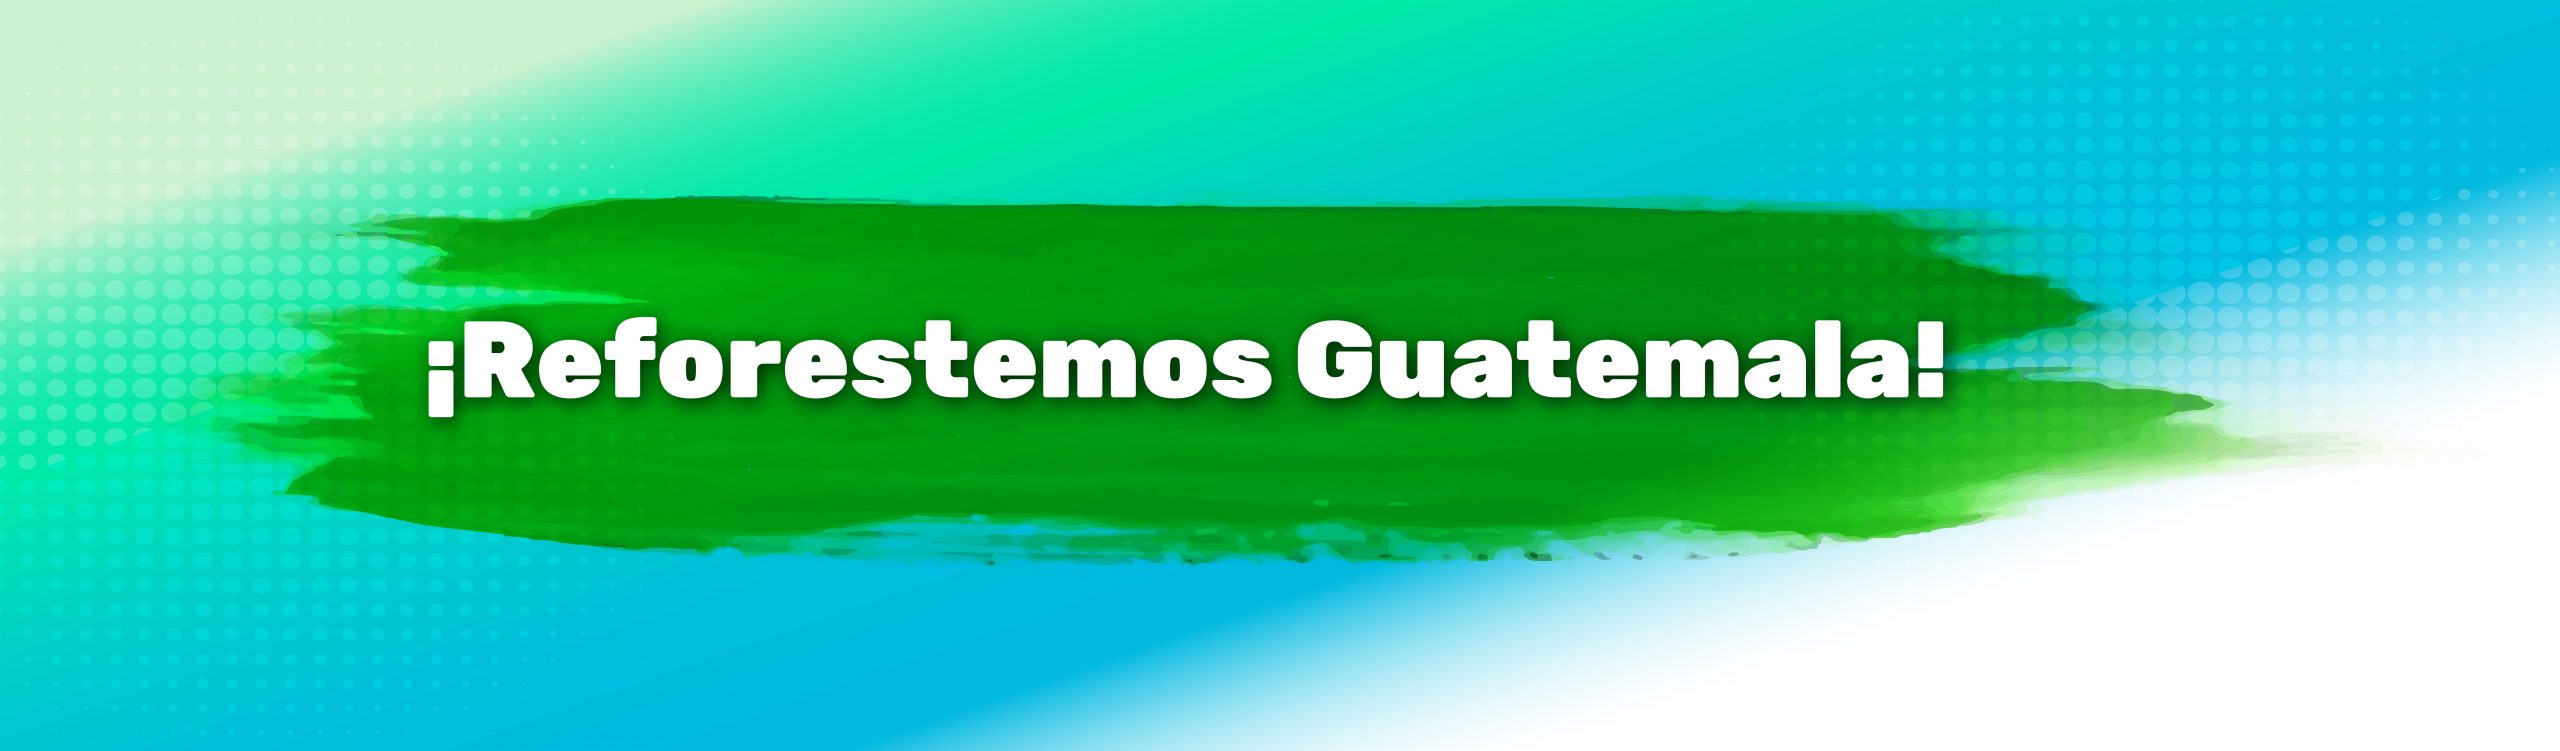 Reforestemos Guatemala